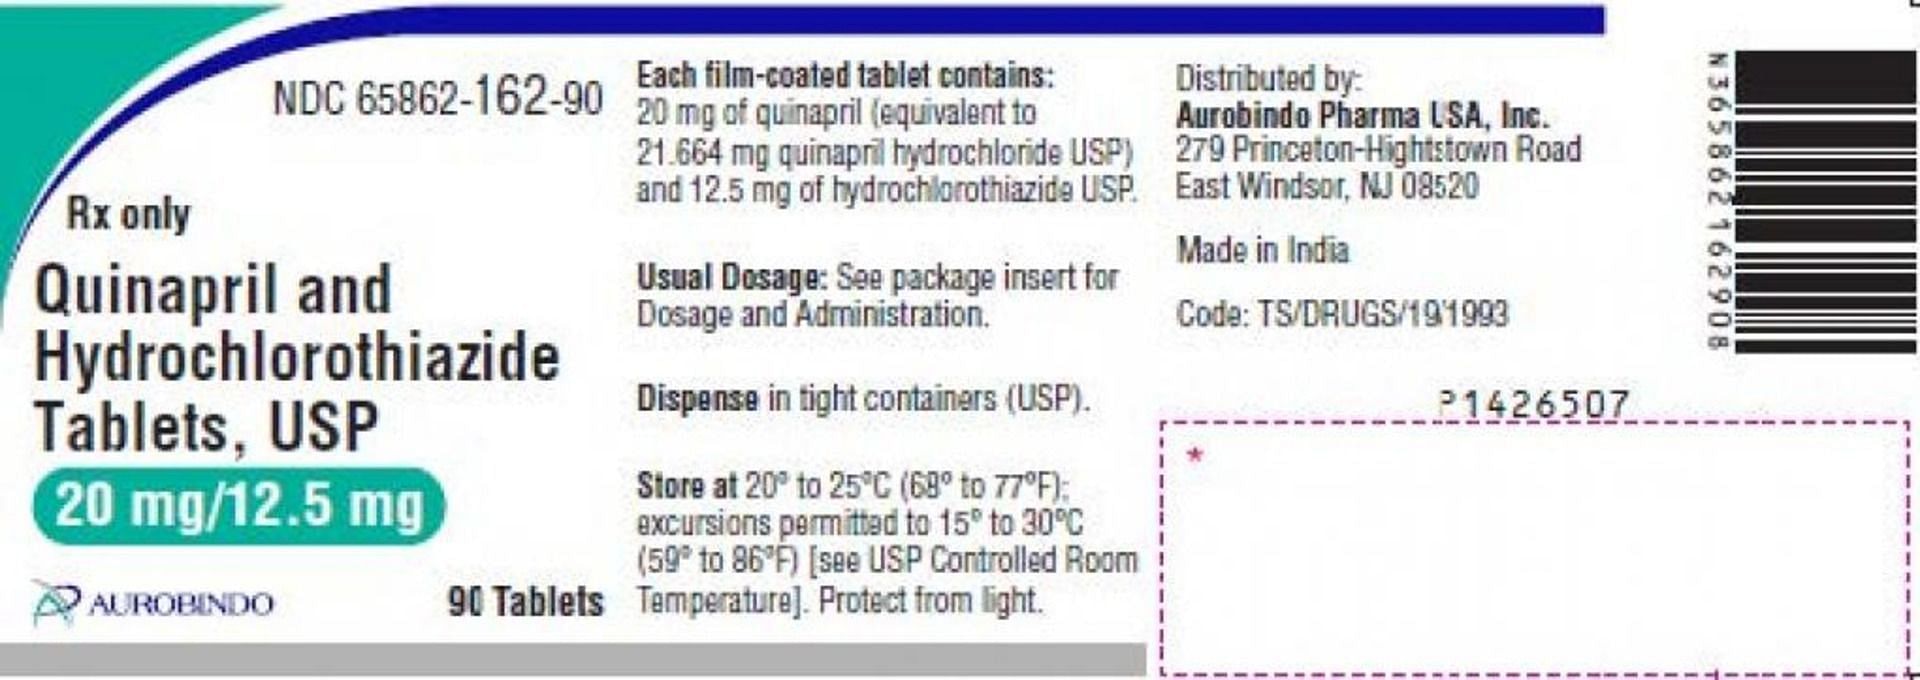 Photo of the medication package (Image via Aurobindo USA)